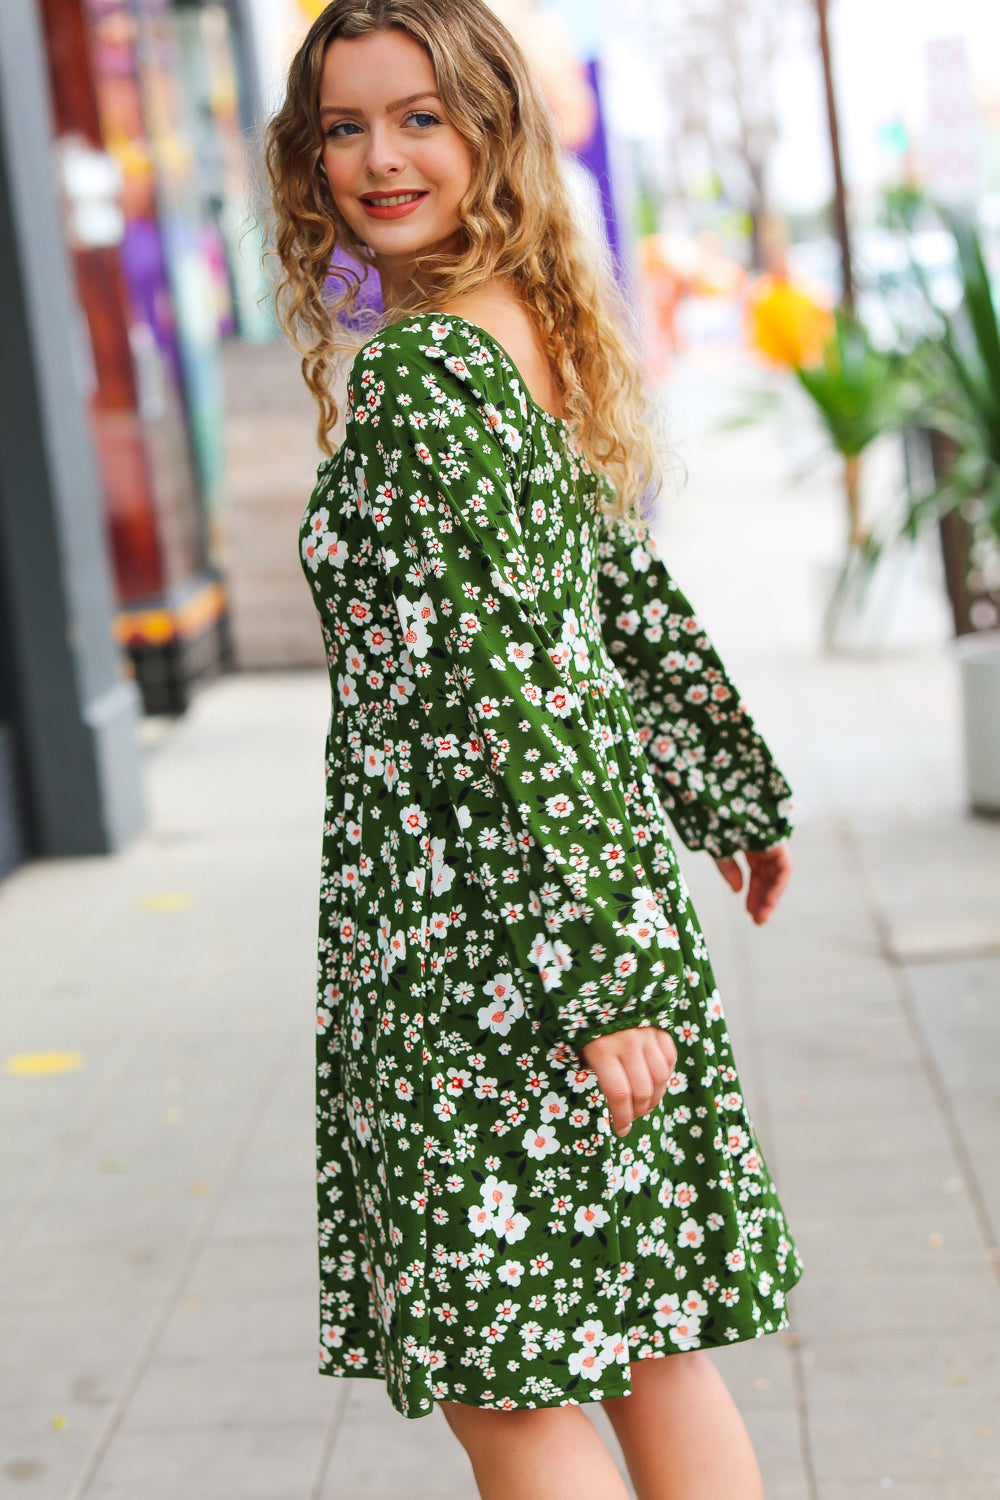 Haptics Positive Perceptions Olive Ditsy Floral Square Neck Dress